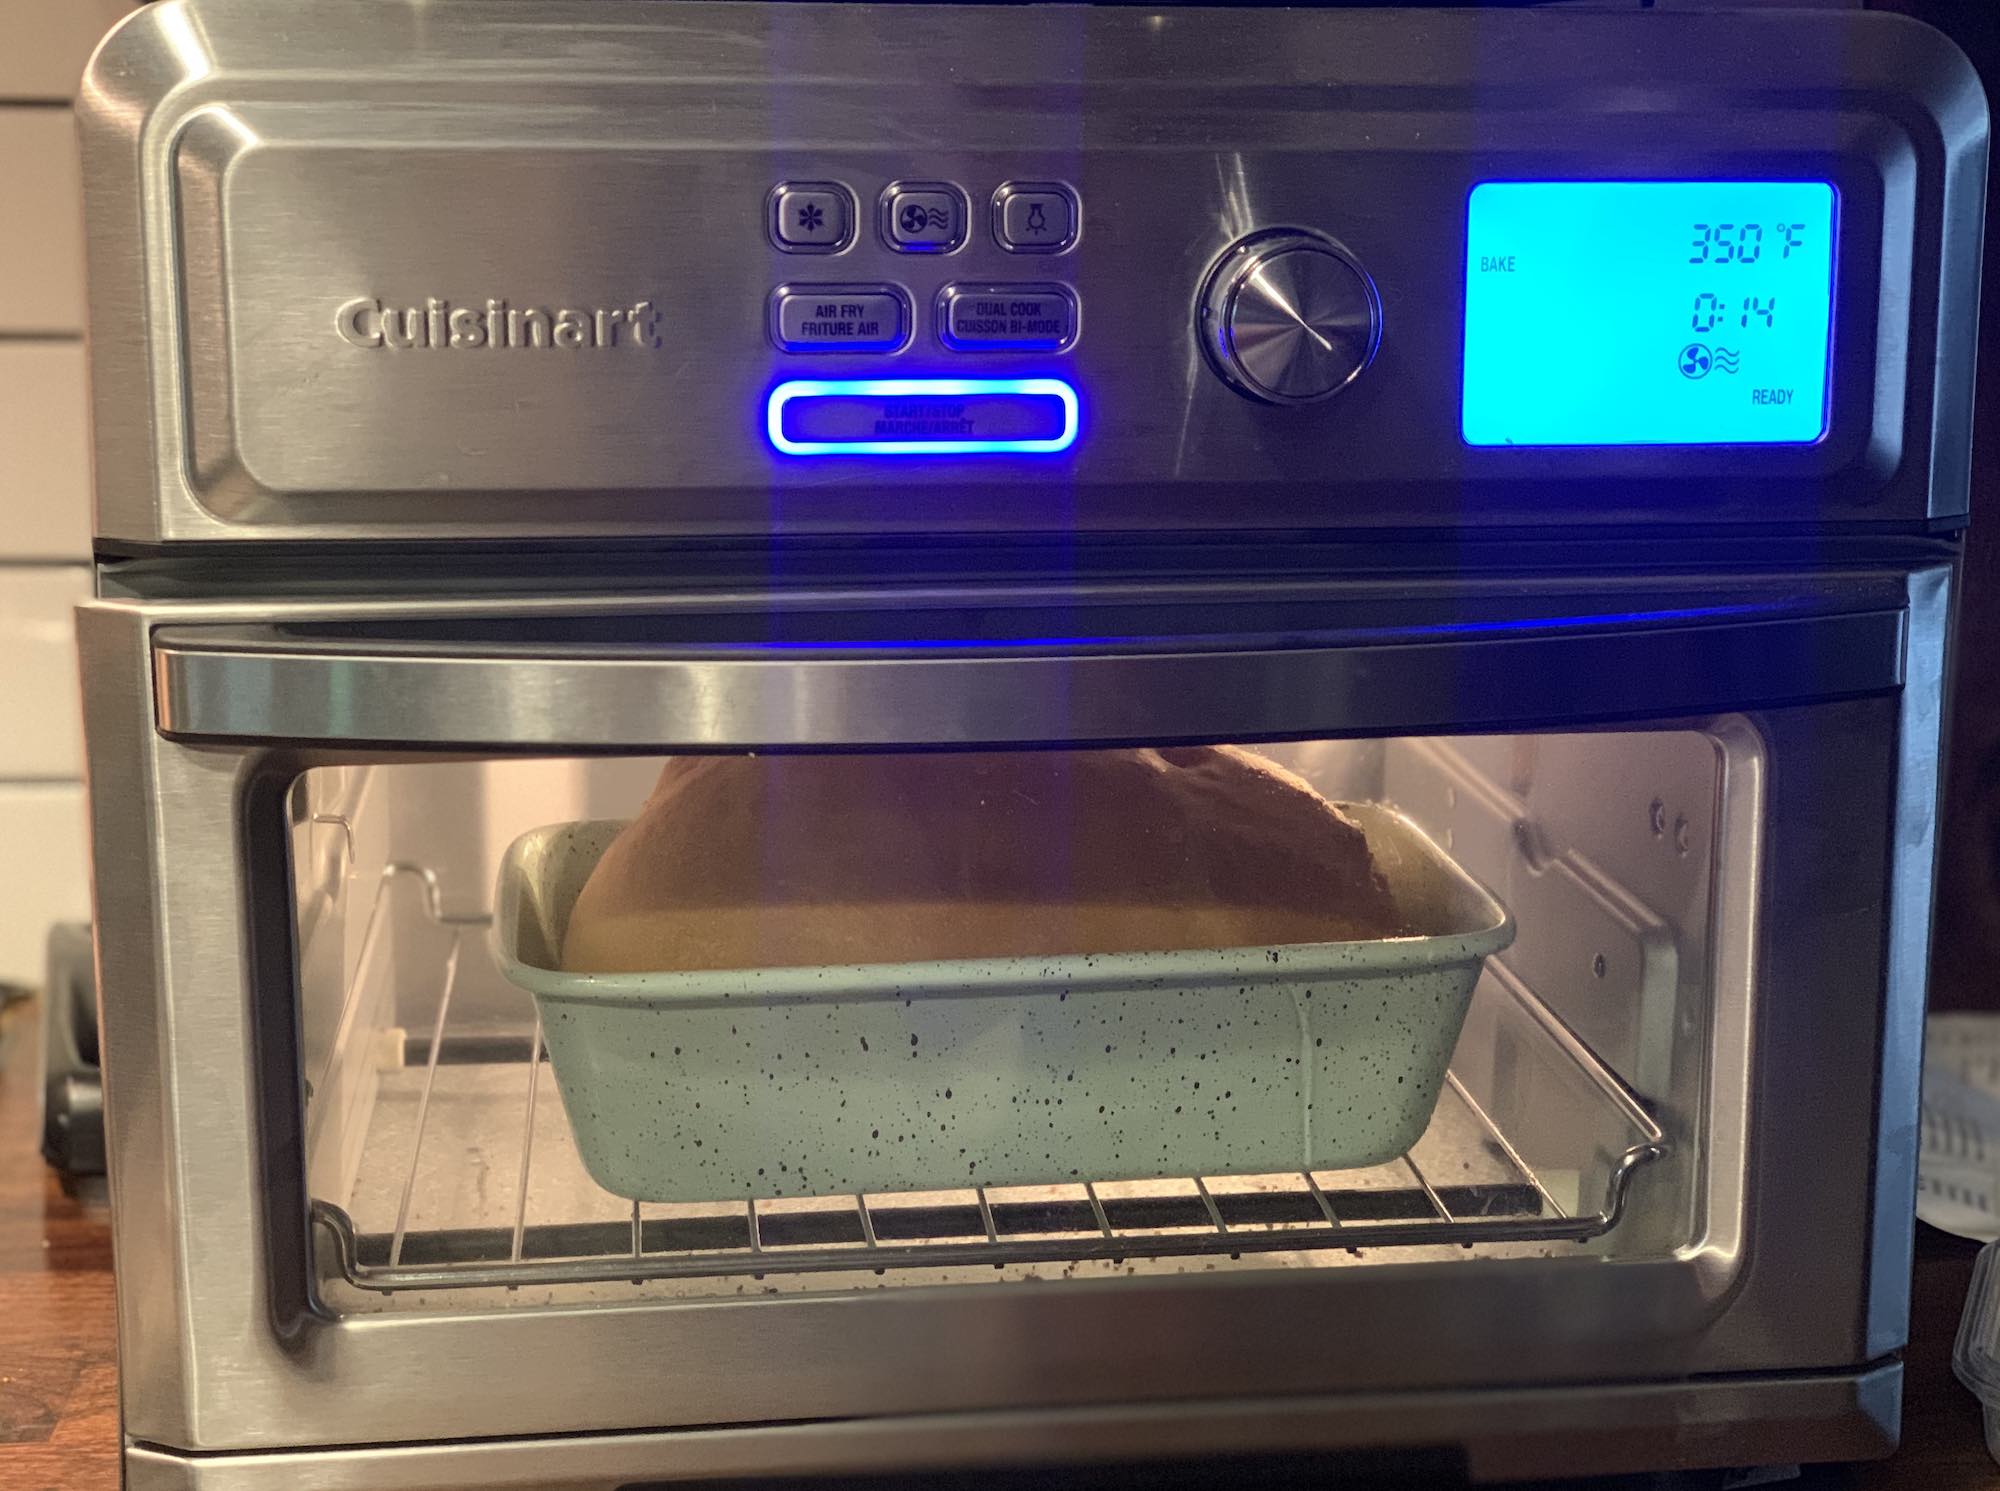 Cuisinart Air Fryer Mini Oven Review